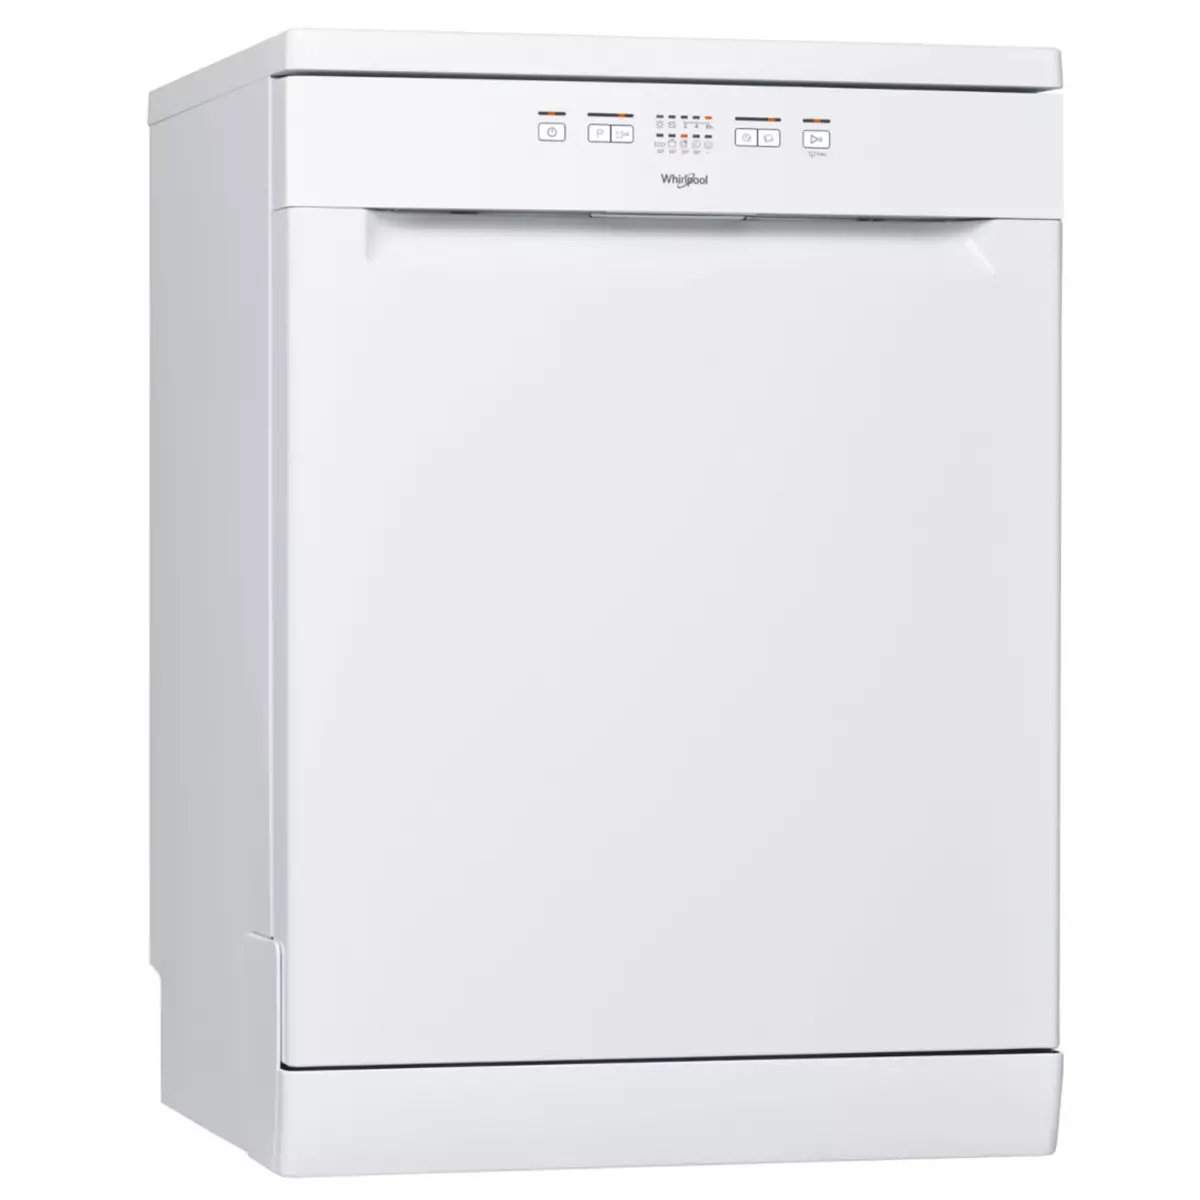 WHIRLPOOL Lave-vaisselle pose libre WFE2B17, 13 couverts, 60 cm, 47 dB, 5 Programmes